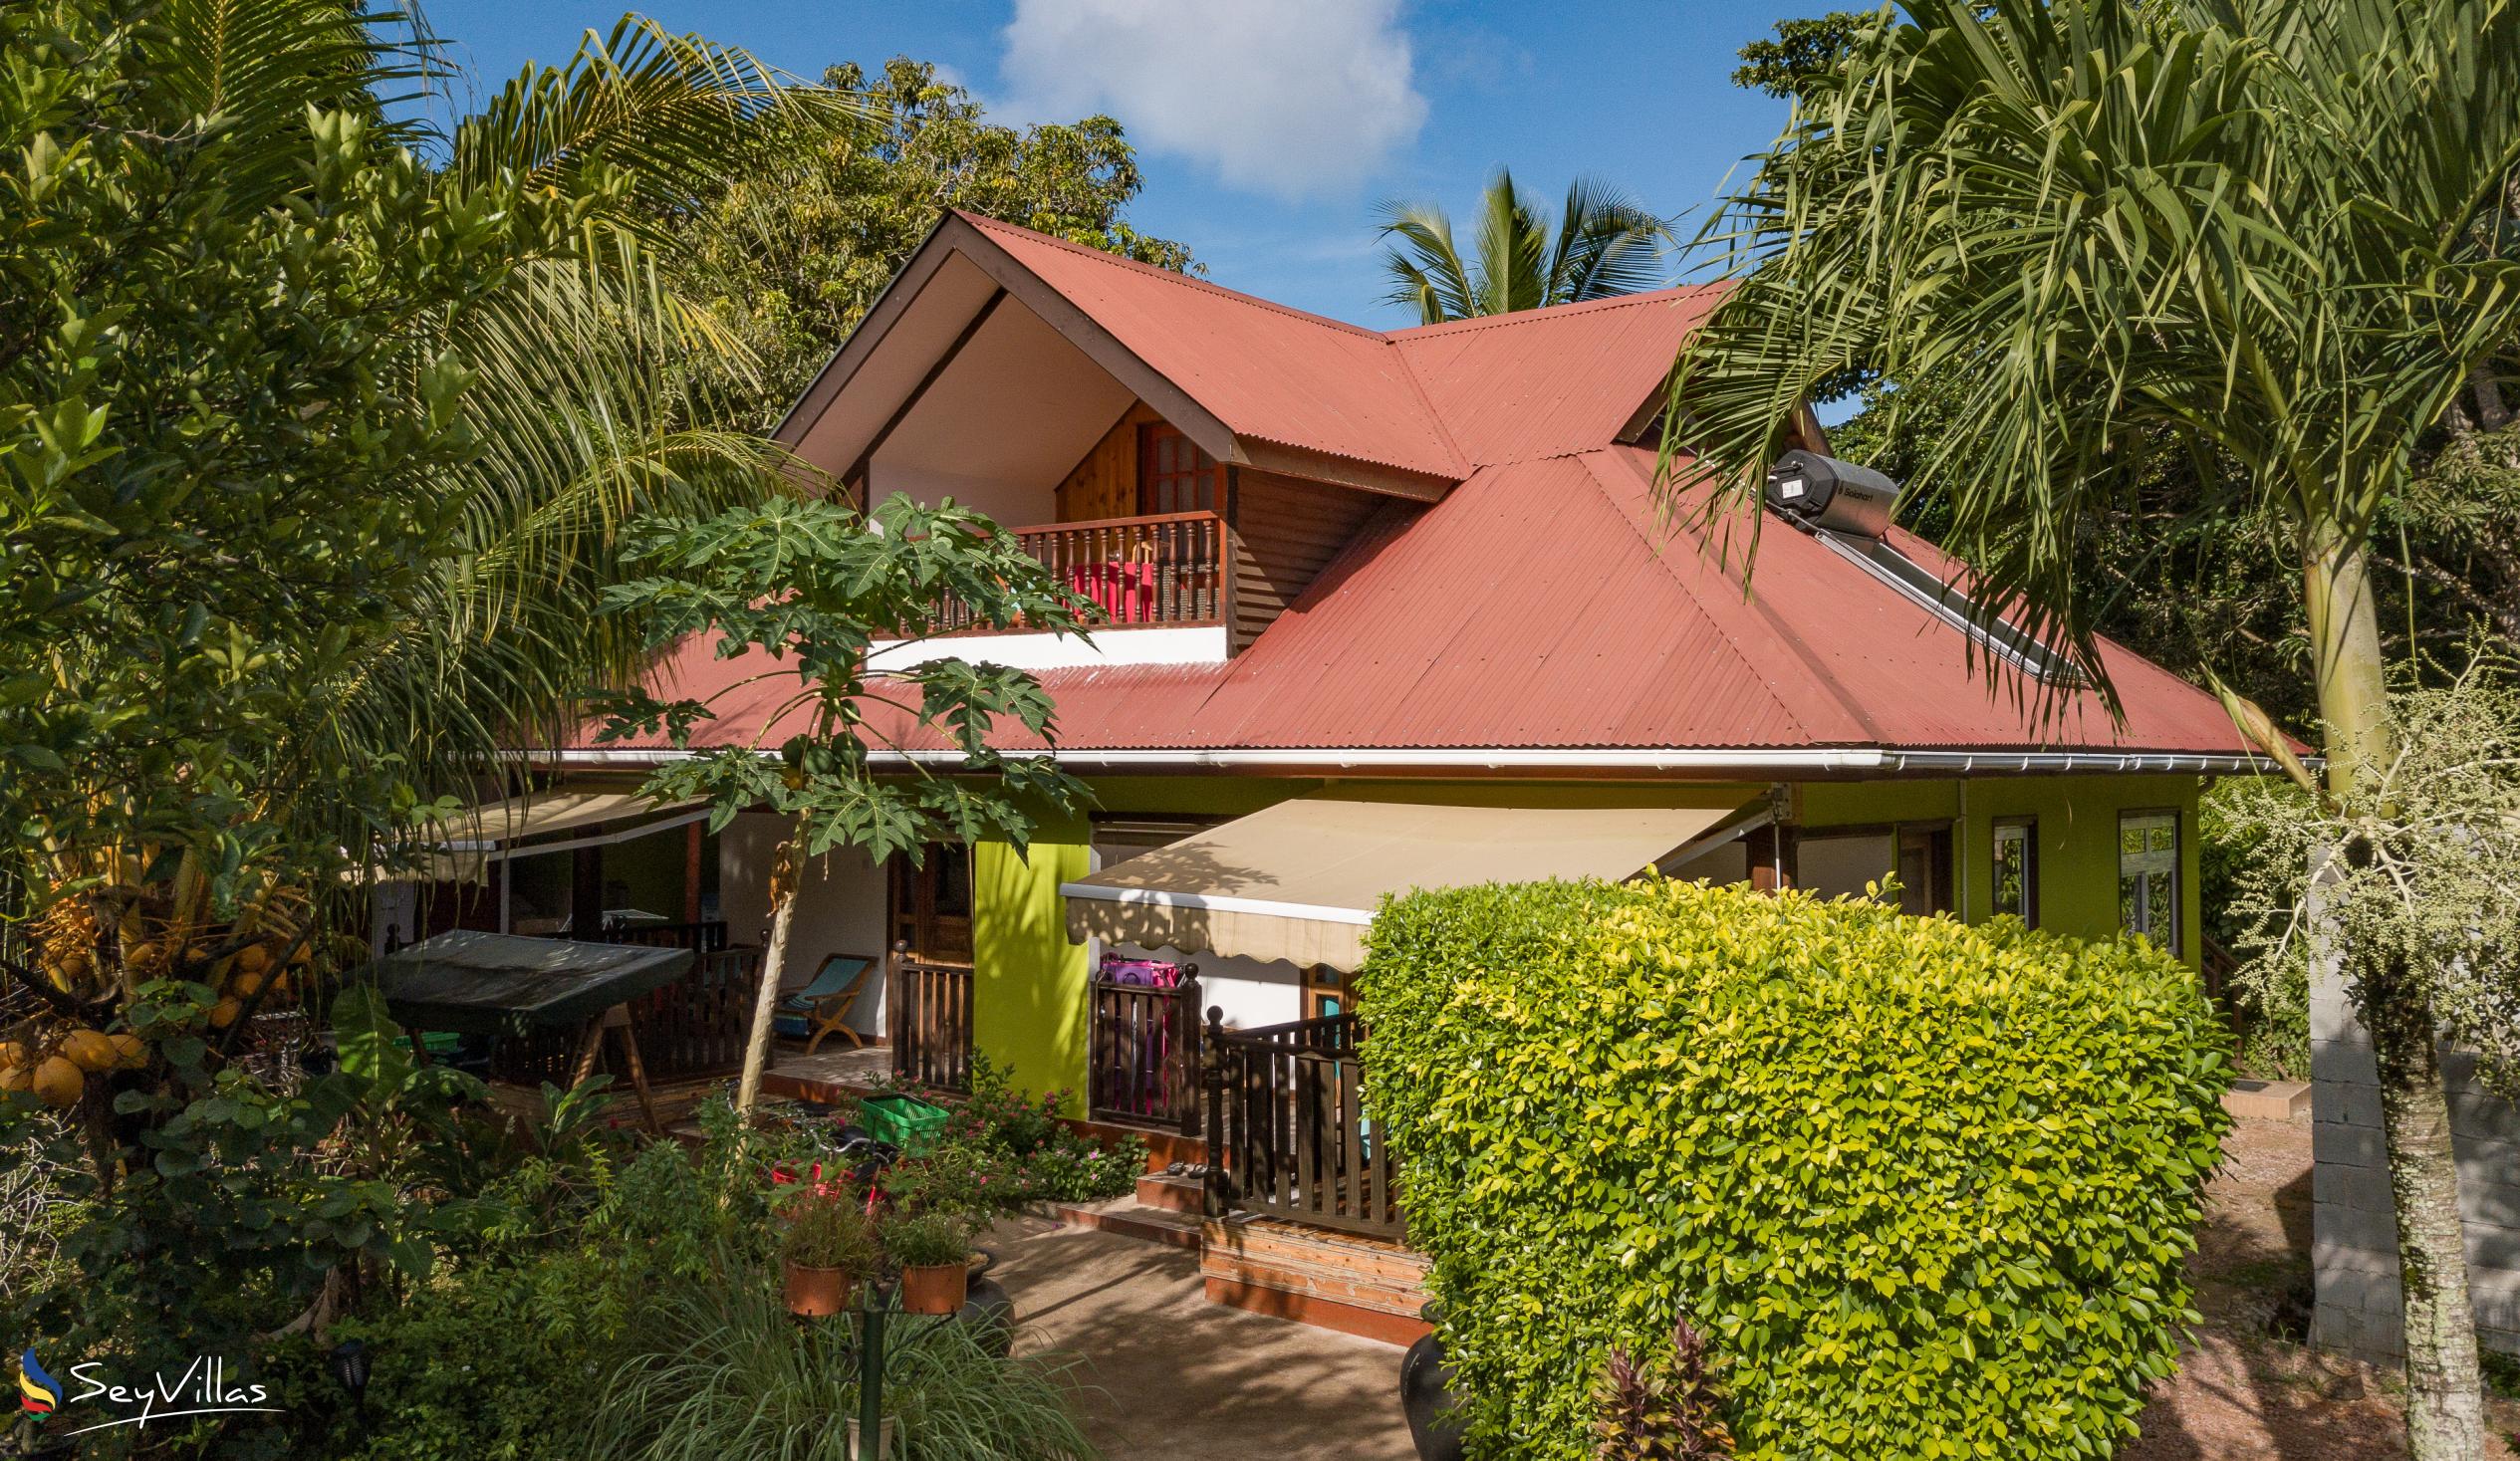 Foto 1: Chloe's Cottage - Aussenbereich - La Digue (Seychellen)